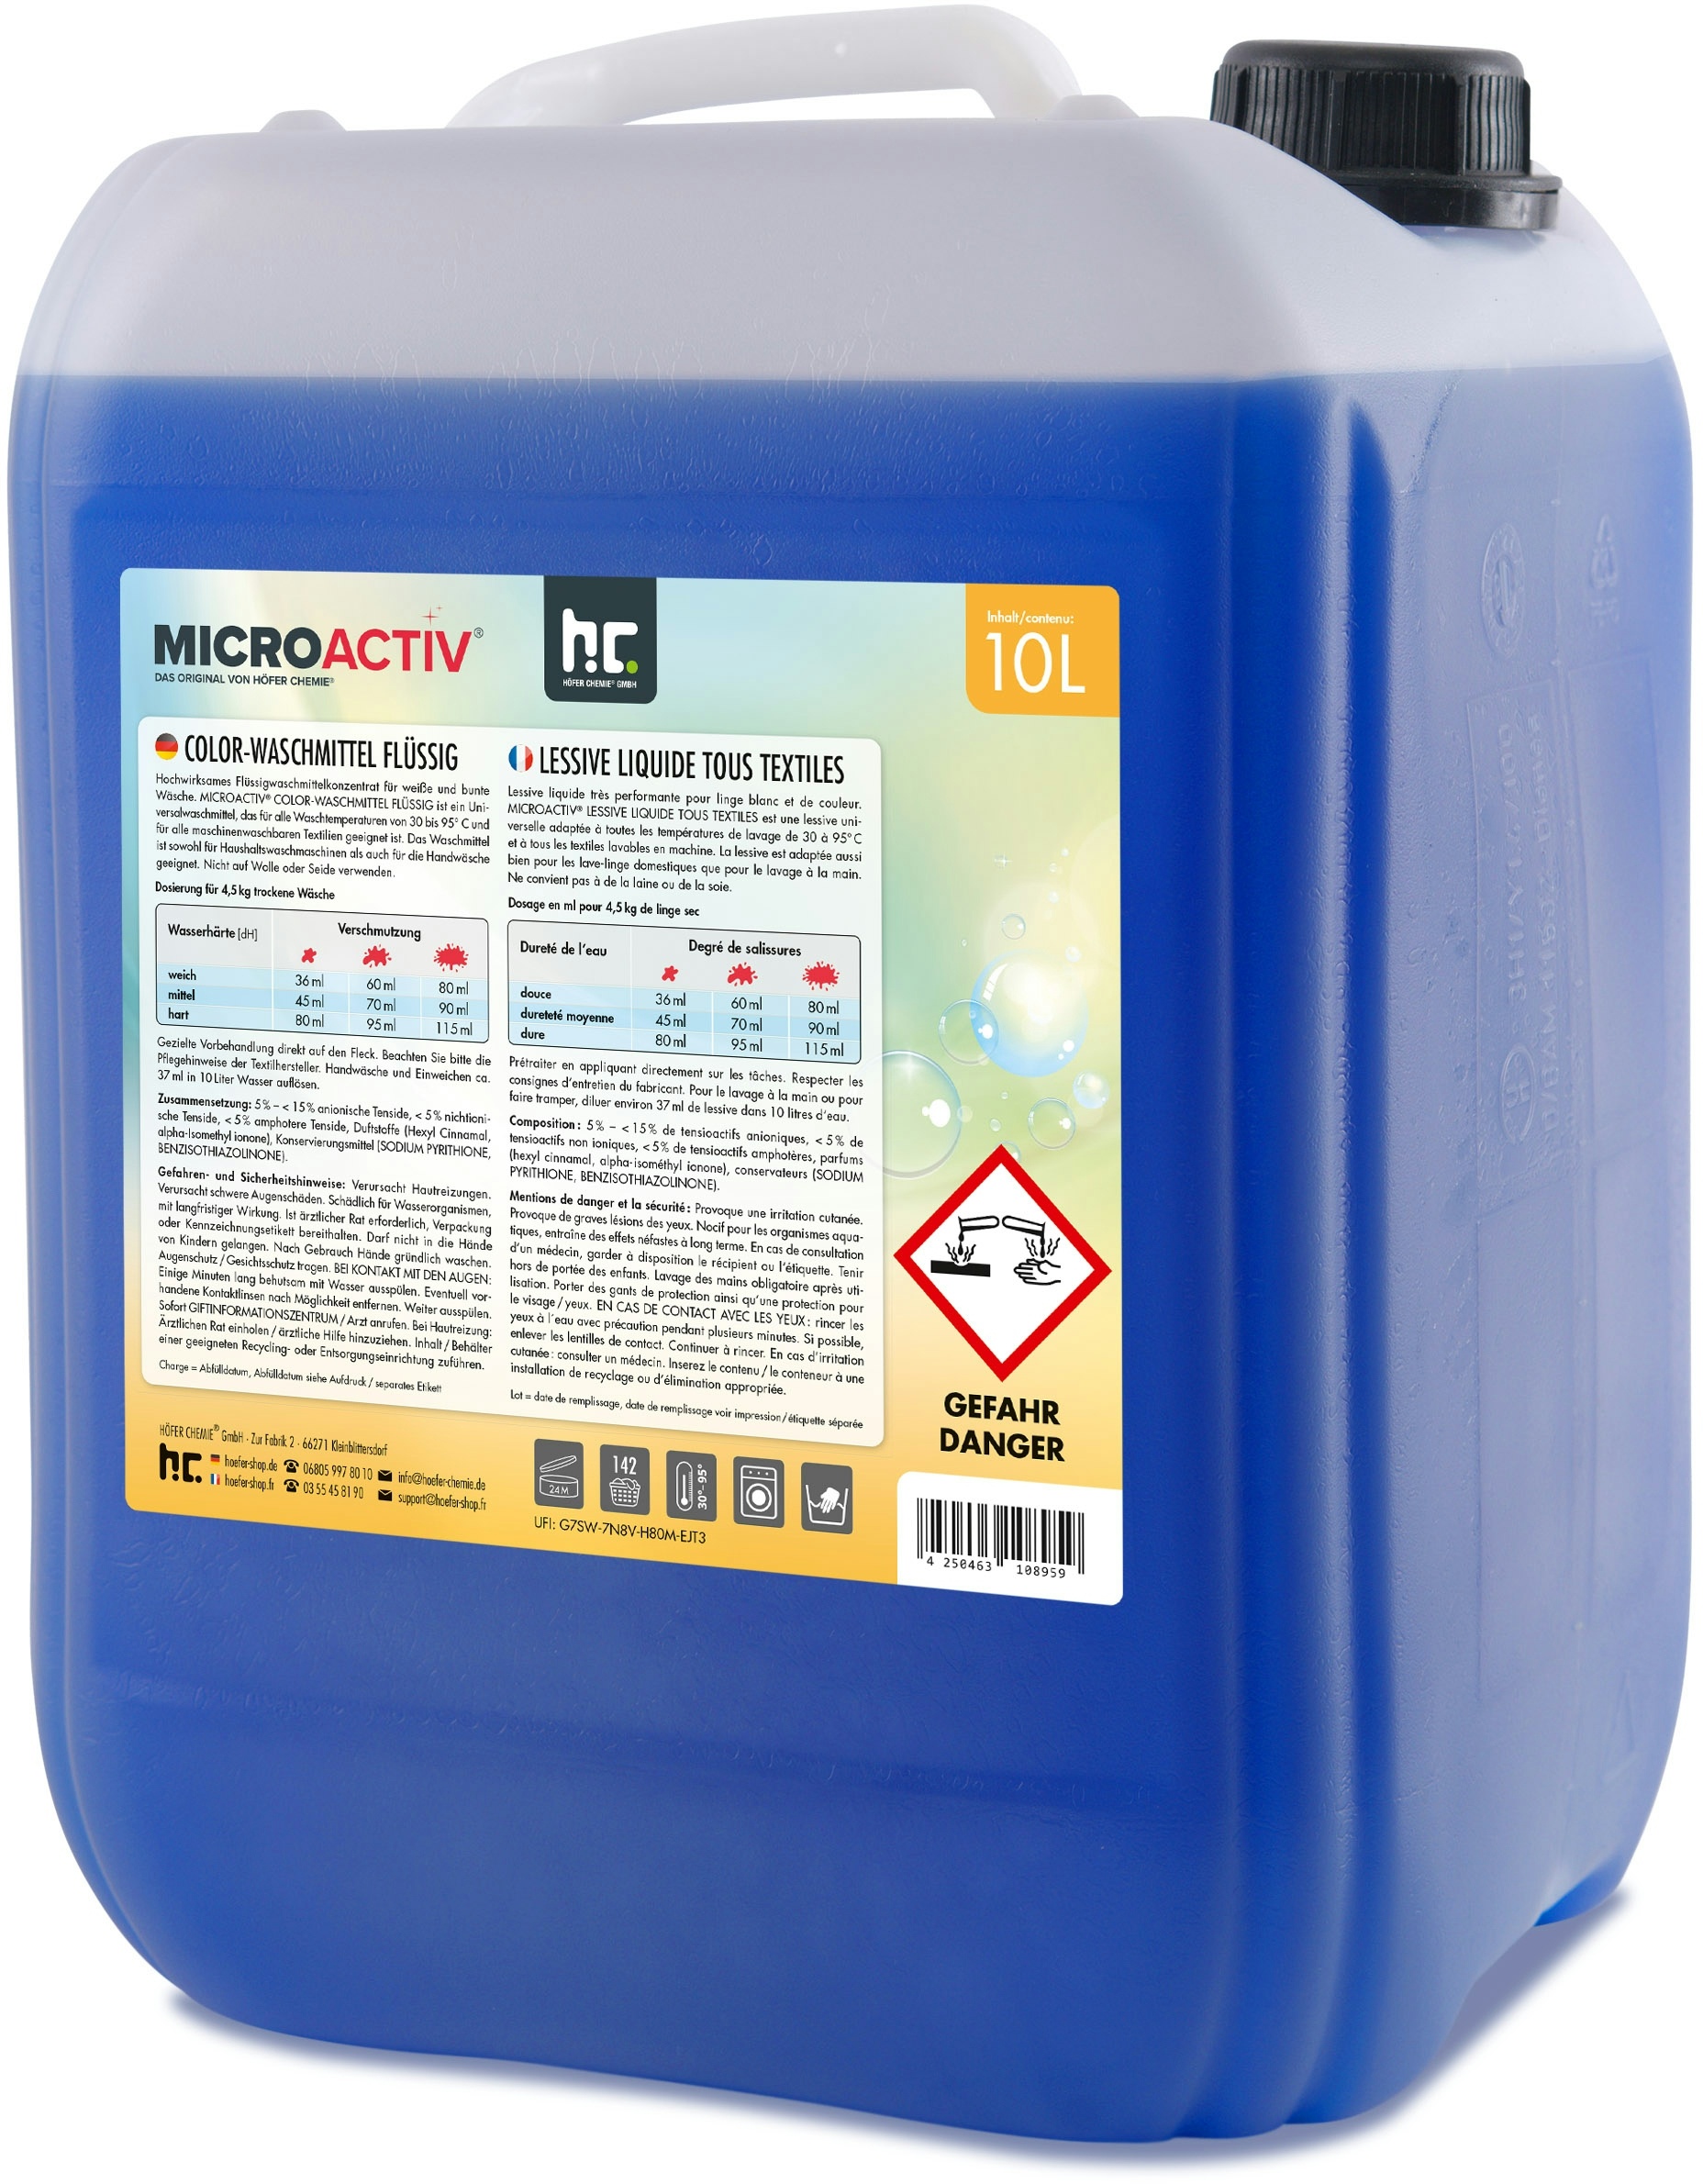 2 x 10 Liter Microactiv® Color Waschmittel flüssig